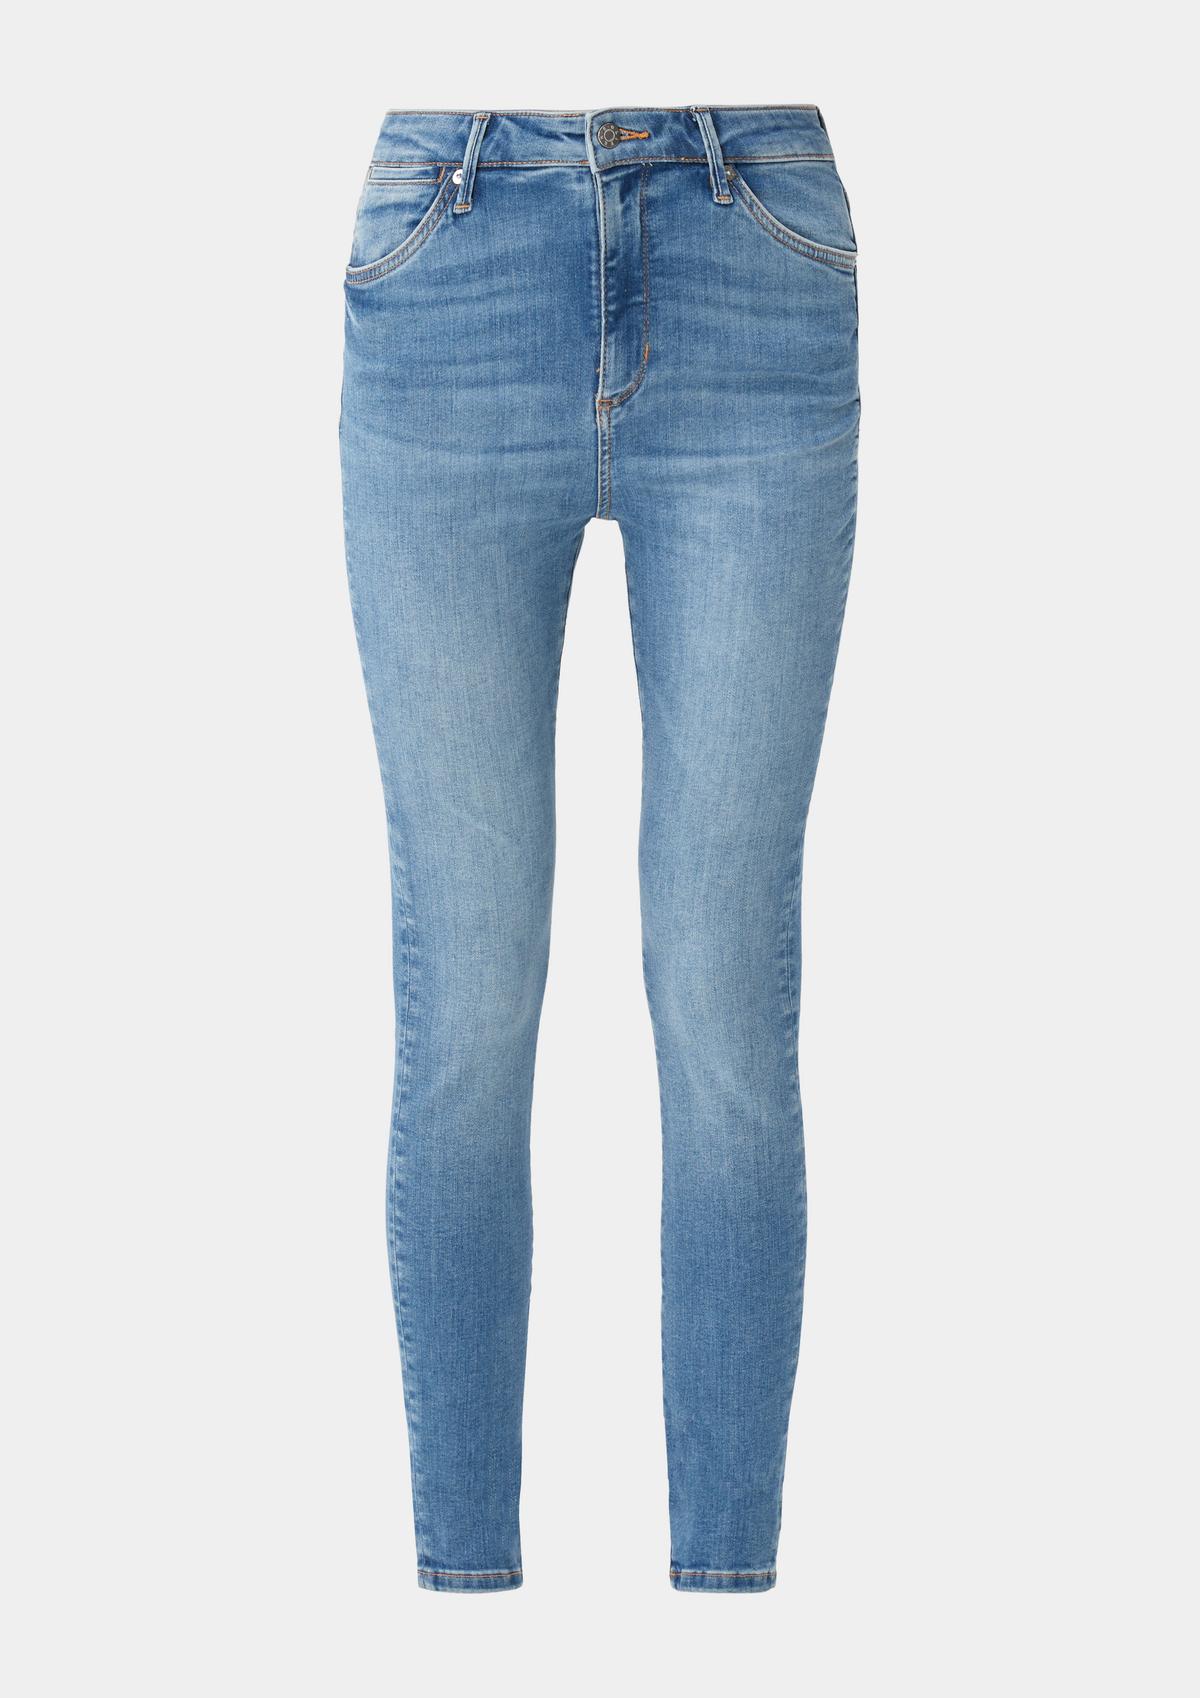 s.Oliver Anny jeans / super skinny fit / high rise / super skinny leg